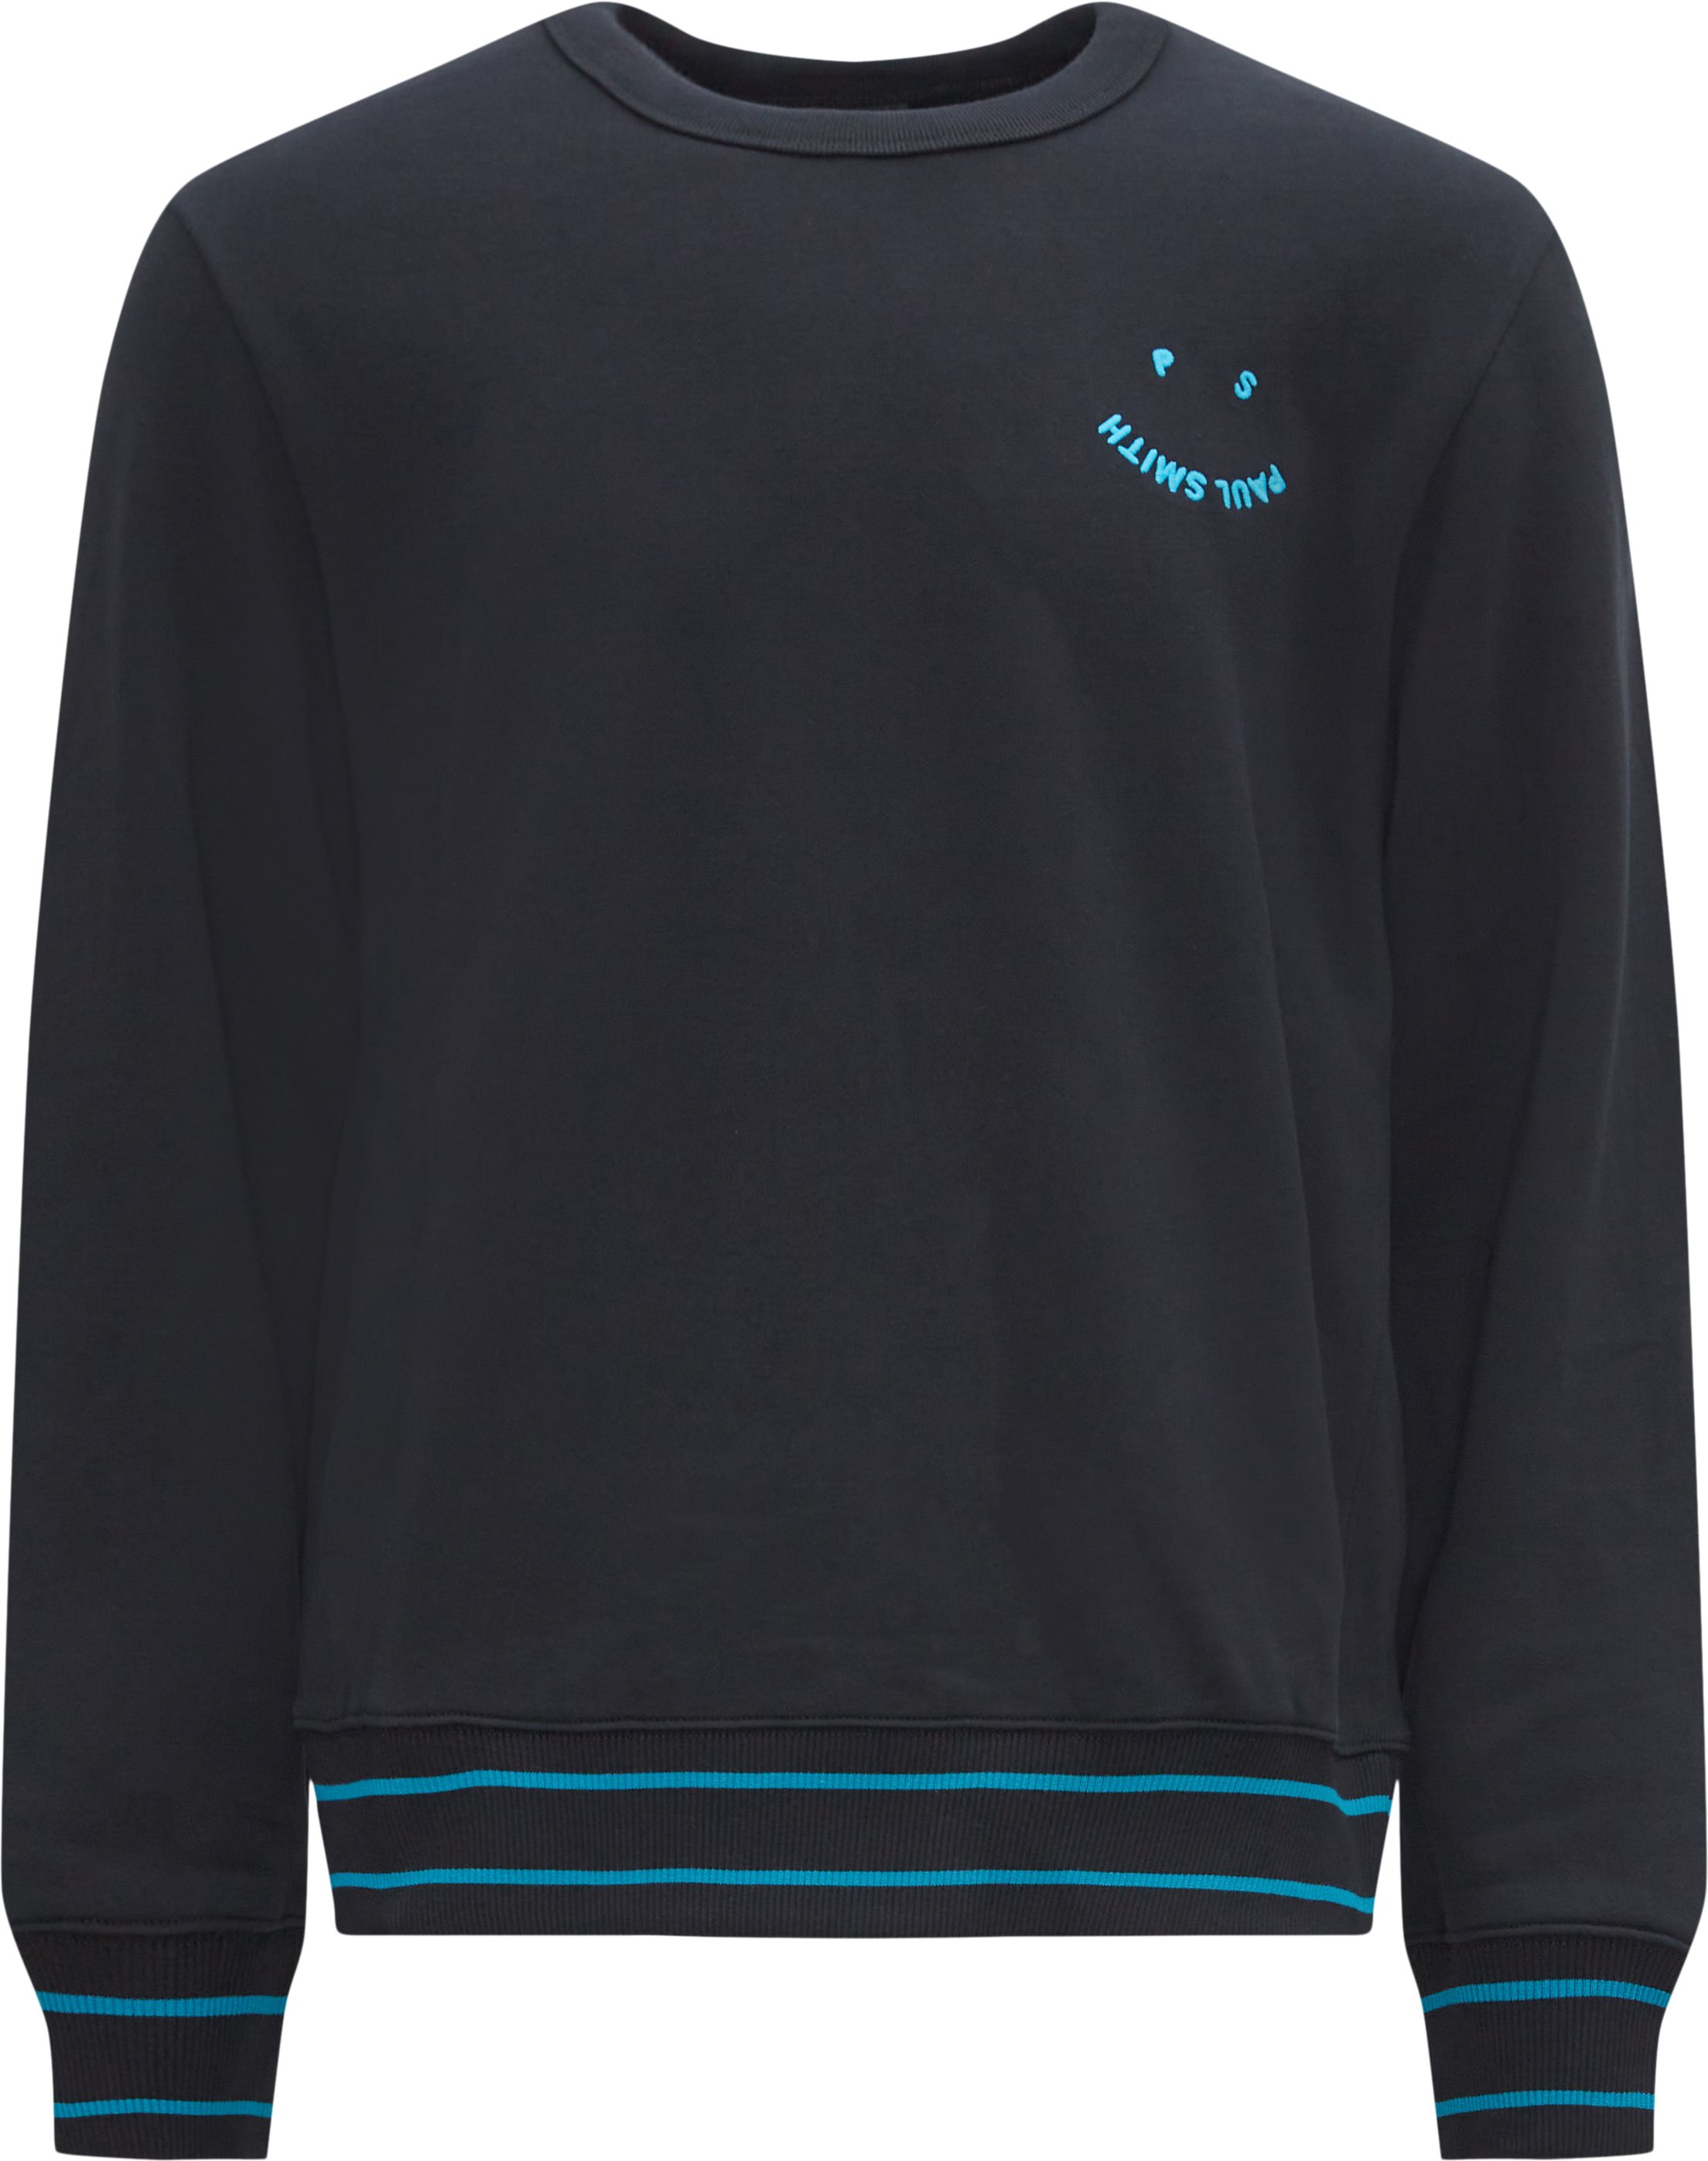 PS Paul Smith Sweatshirts 676XE J21169 A Black